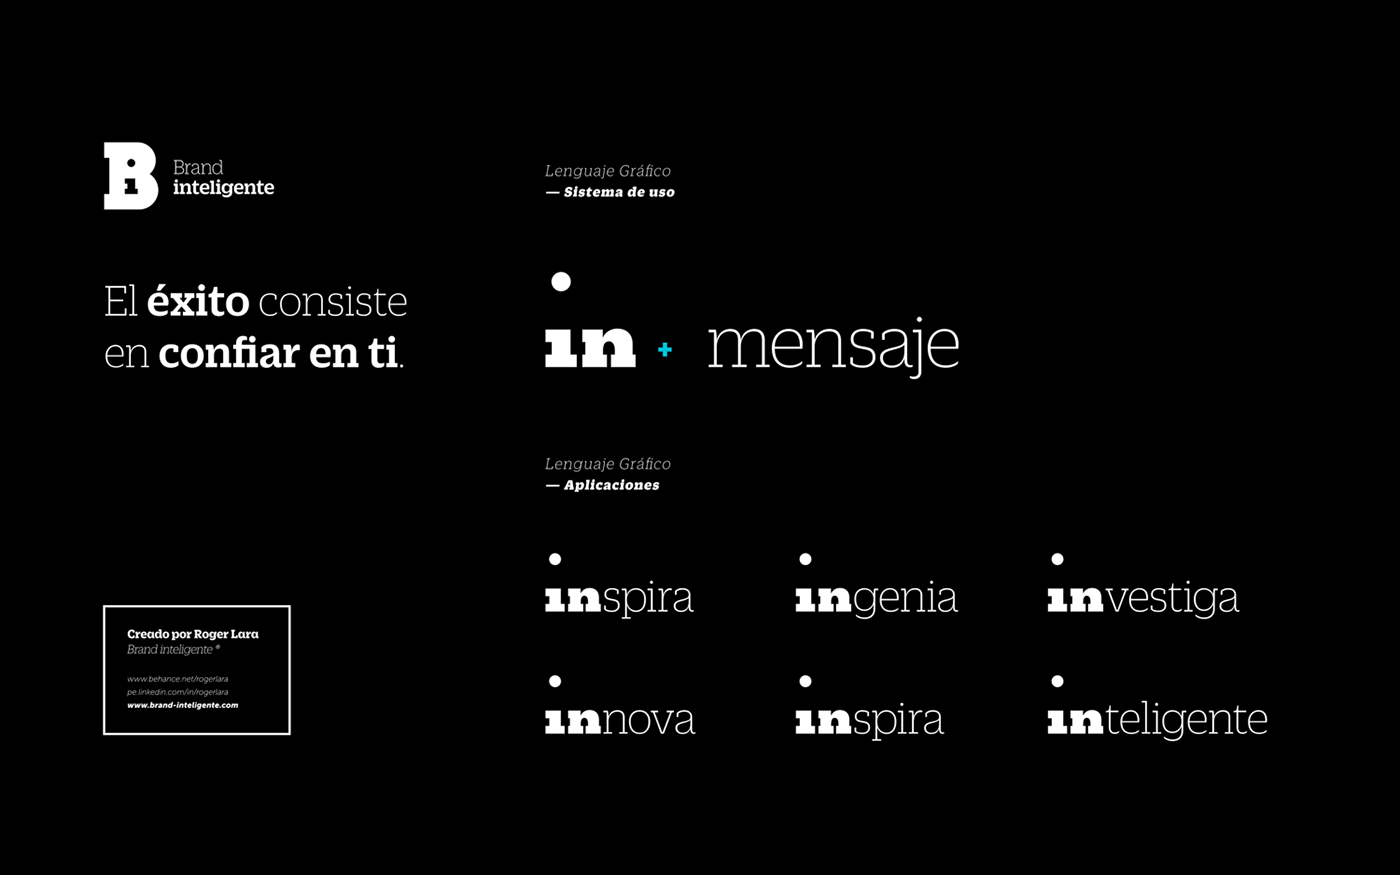 brand inteligente roger lara lima peru logo minimal Logotype art marca identidad imagen corporativo